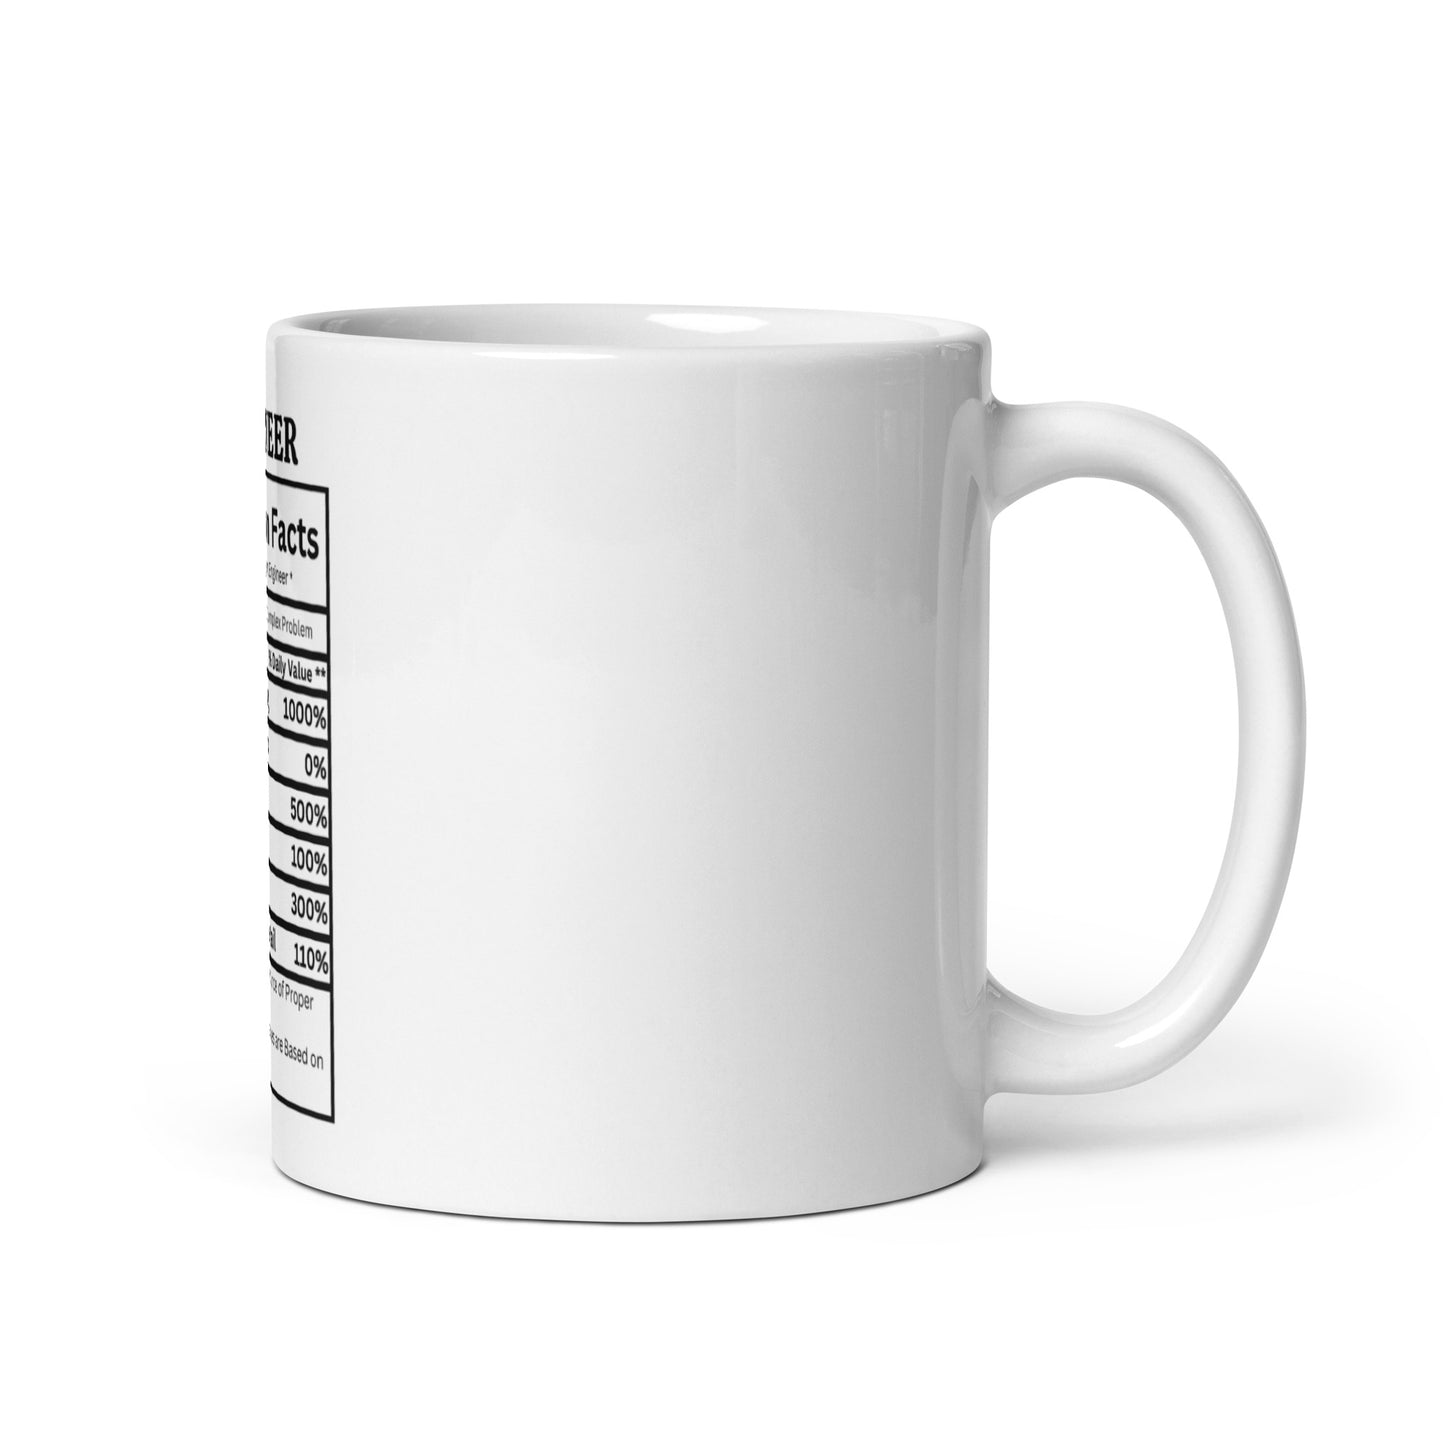 Engineer Label mug